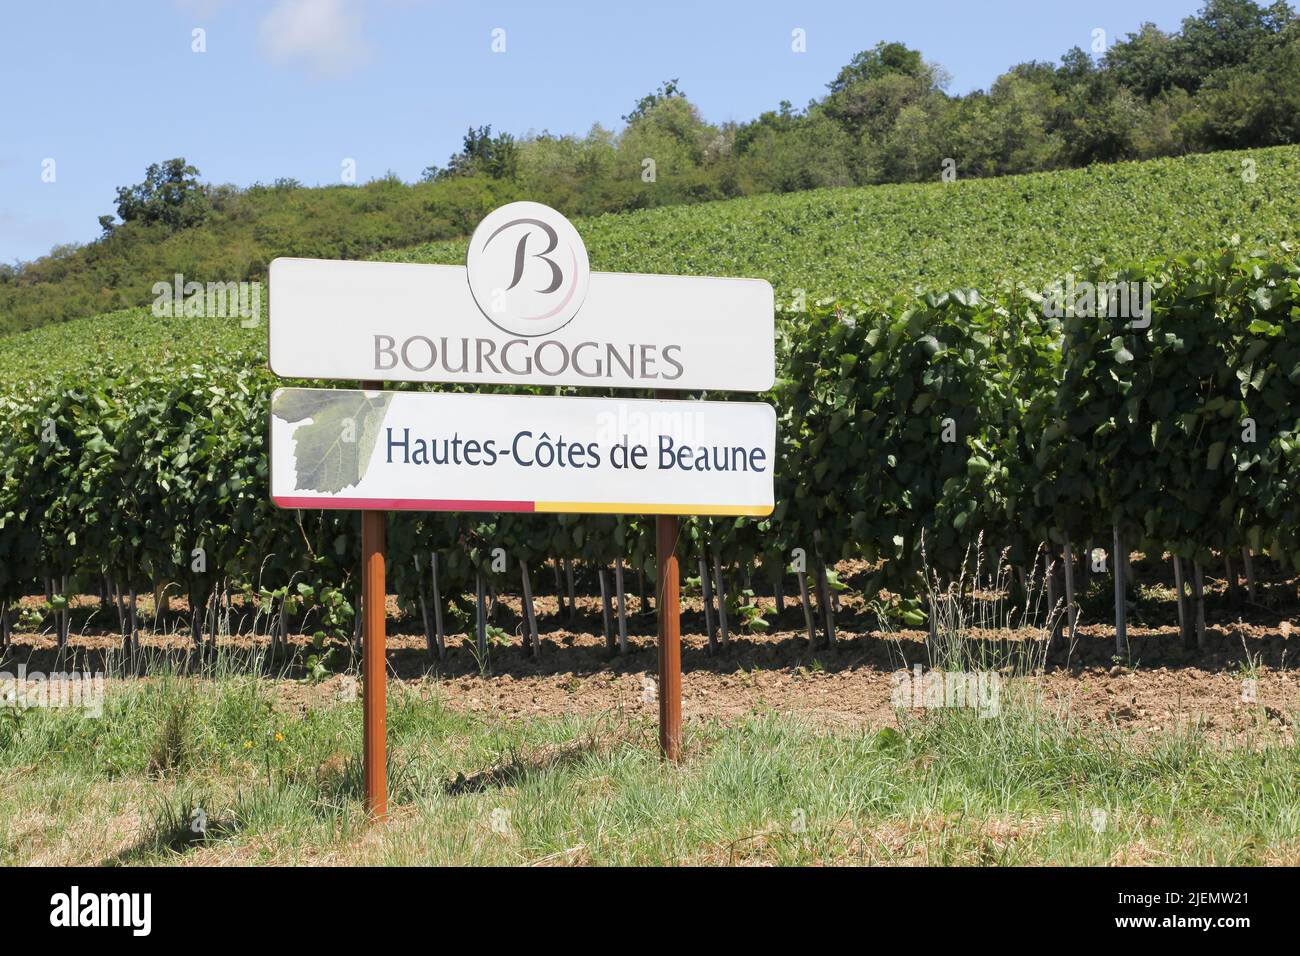 La Rochepot, Francia - 5 de julio de 2020: Señal de carretera Hautes-Cotes de Beaune, vino de Borgoña, Francia Foto de stock